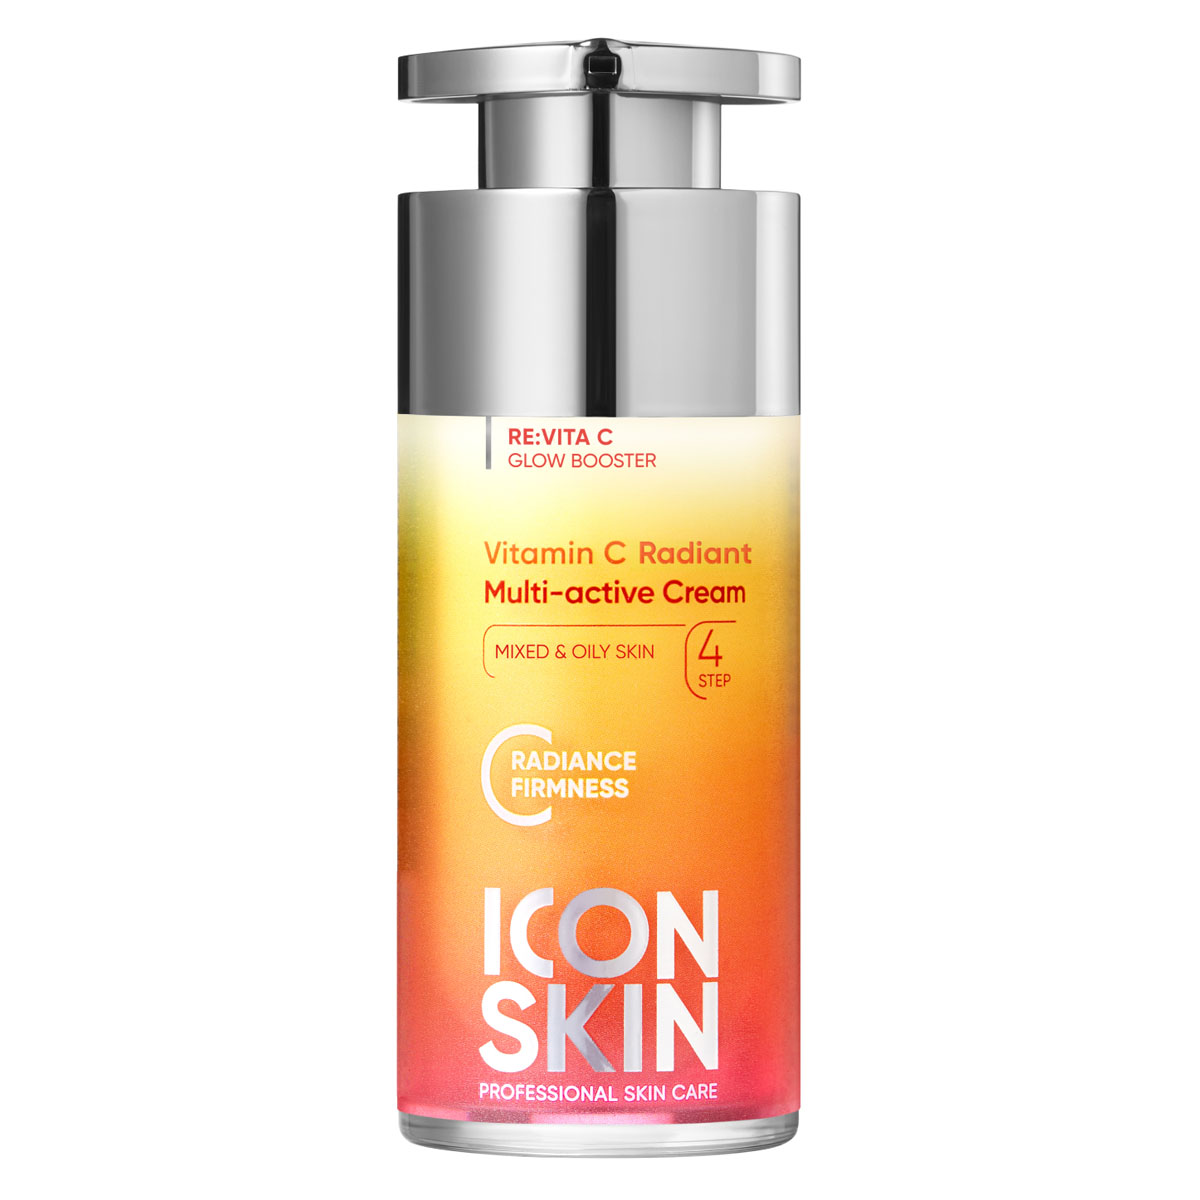 Icon Skin Мультиактивный крем для комбинированной и жирной кожи Vitamin C Radiant, 30 мл (Icon Skin, Re:Vita C)